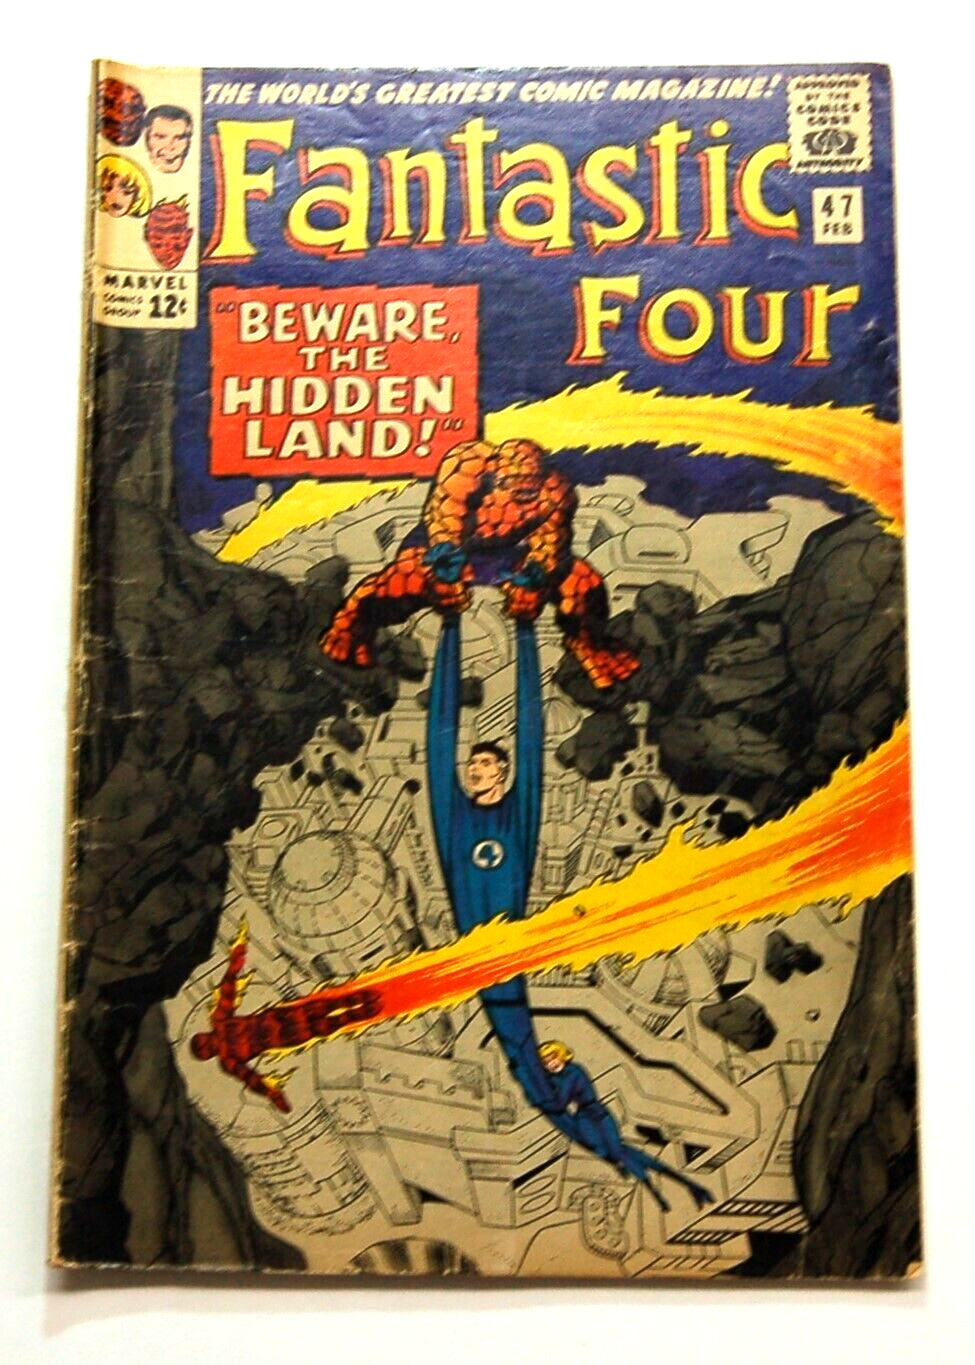 Fantastic Four #47 Feb. 1966 Comic “Beware The Hidden Land” Marvel 12¢ cover